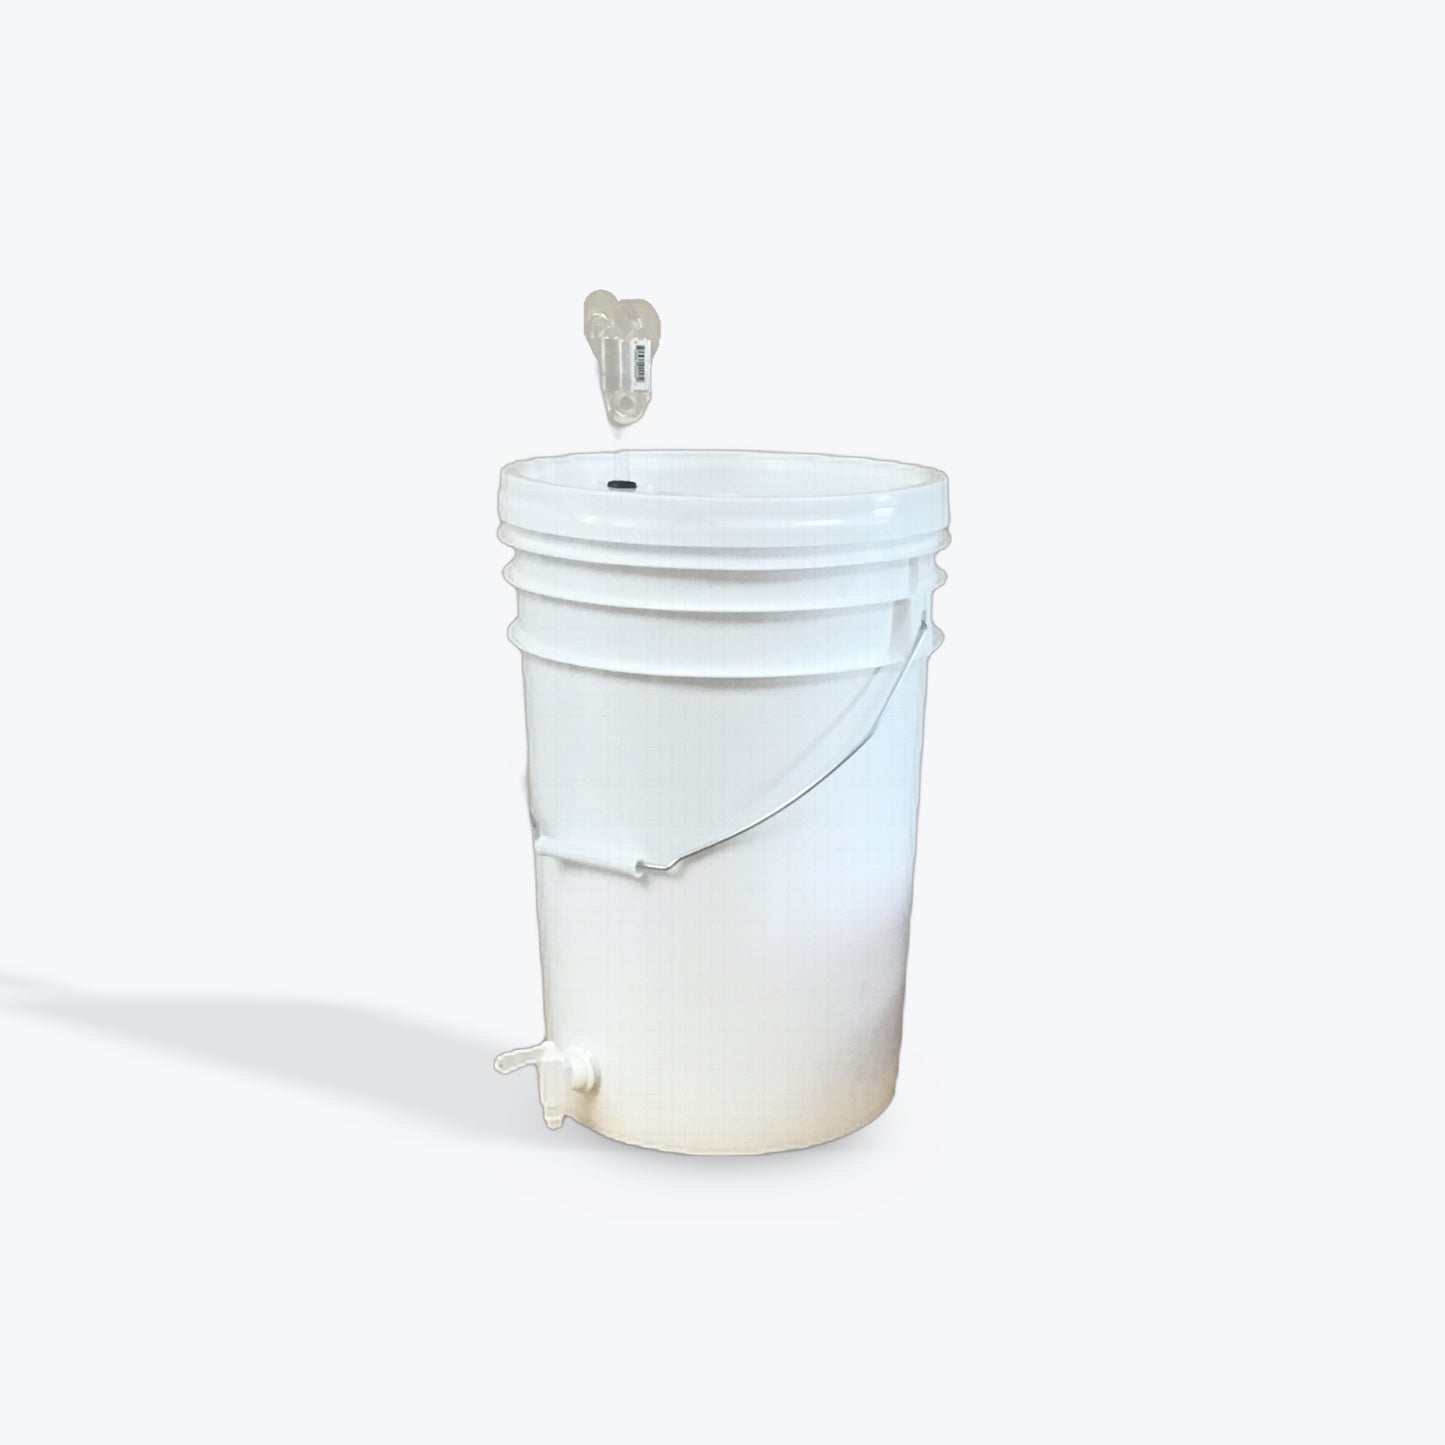 6 gallon Bucket Fermenter with gasket airlock and spigot